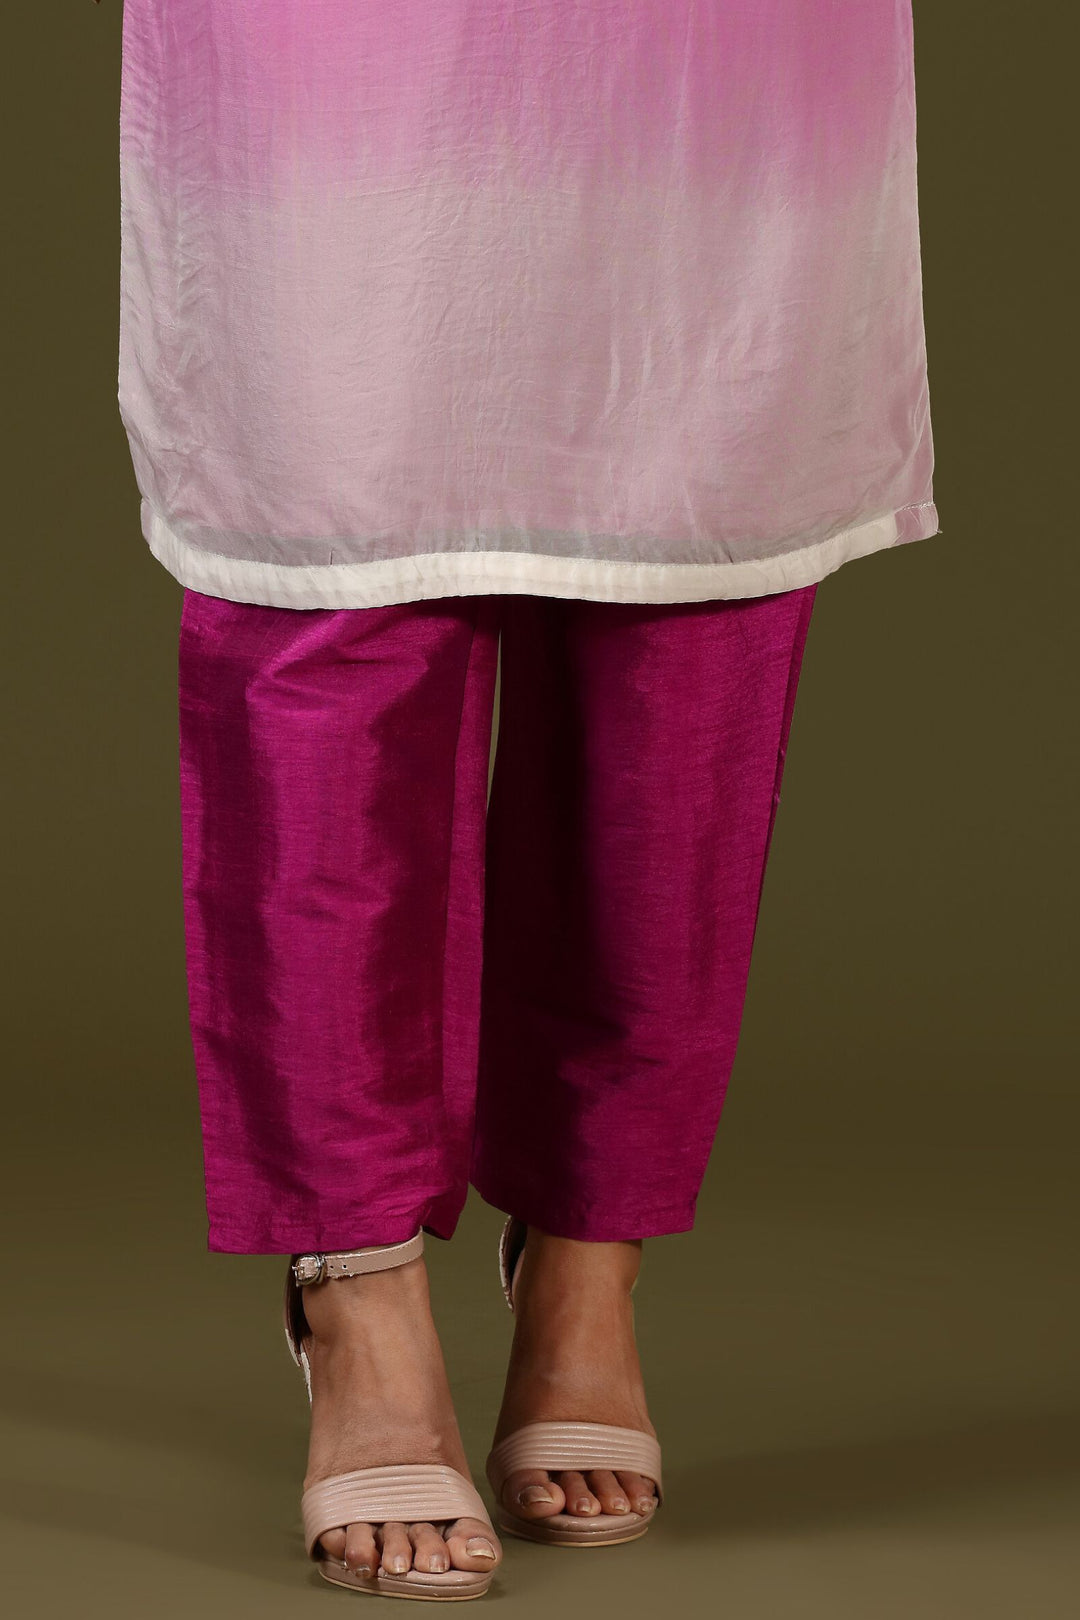 Magenta with Cream Pearl, Thread, Beads and Zardozi work Straight Cut Salwar Suit